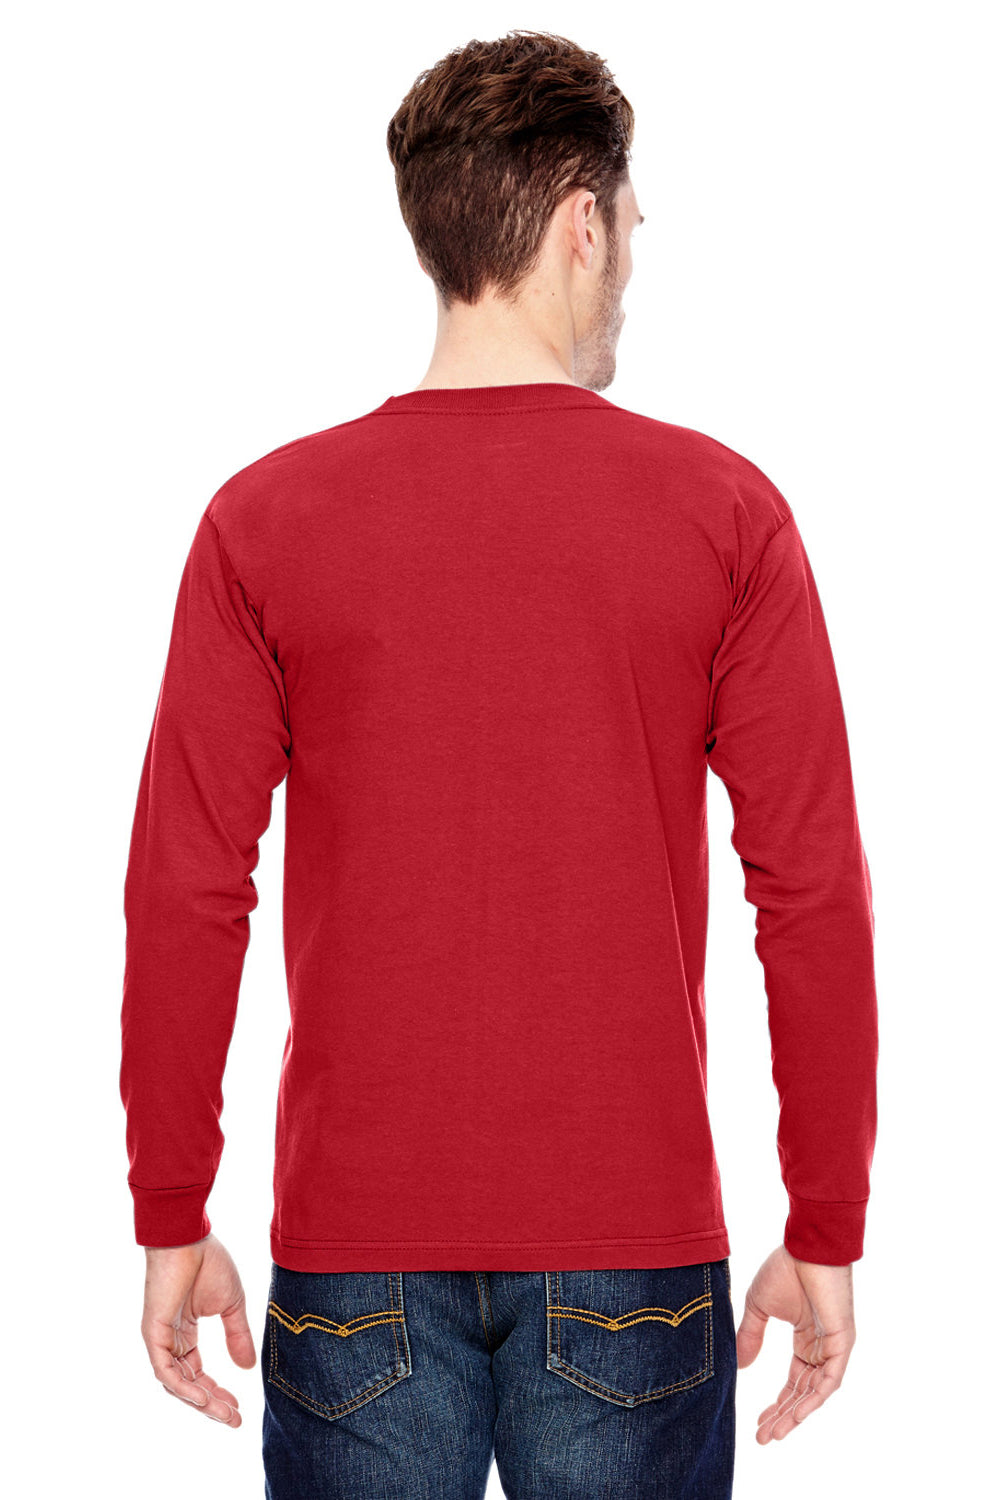 Bayside BA6100 Mens USA Made Long Sleeve Crewneck T-Shirt Red Model Back